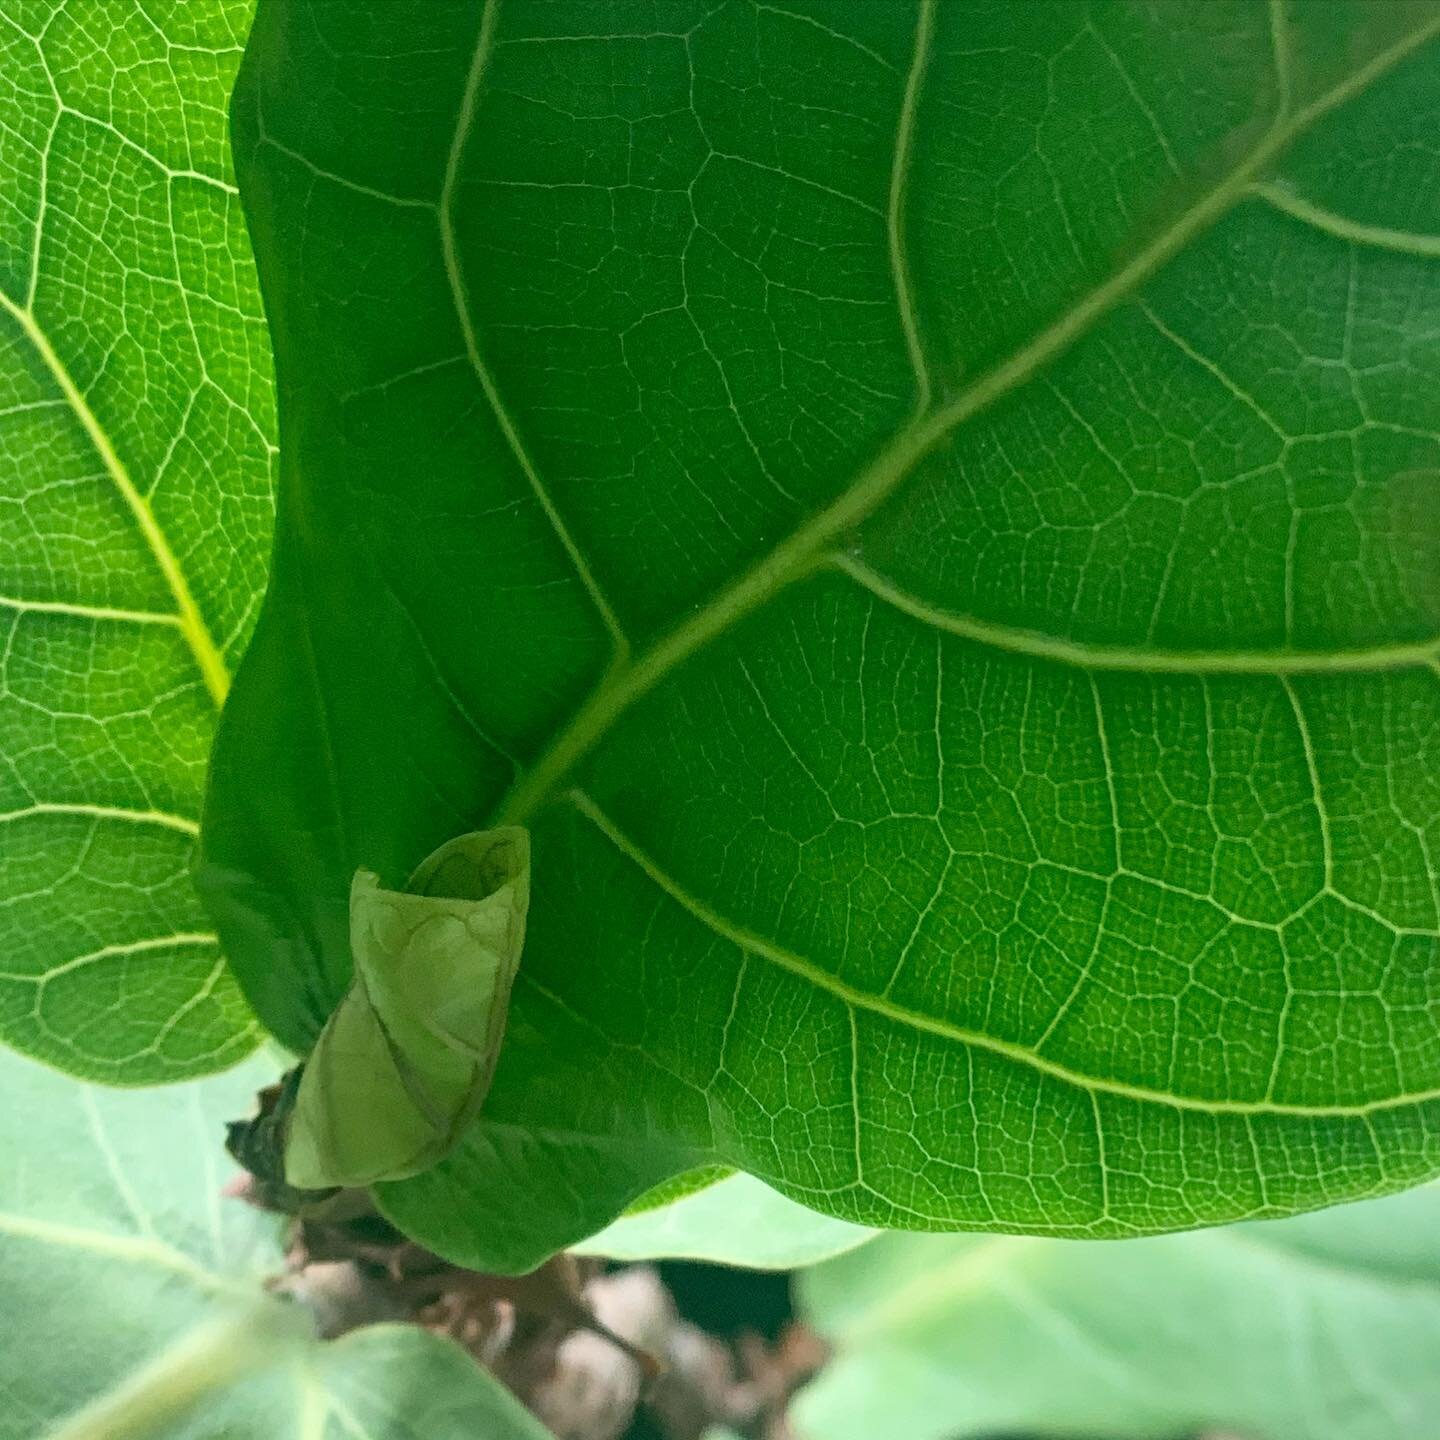 New growth on the Fiddle Leaf Fig 🌿 
.
.
.
.
.
.
.
.
.
.
.
#fiddleleaffig #indoorplant #rhs #plantsofinstagram #indoorgarden #gardendesign #amsterdam #battersea #tropicalplants #africanplants